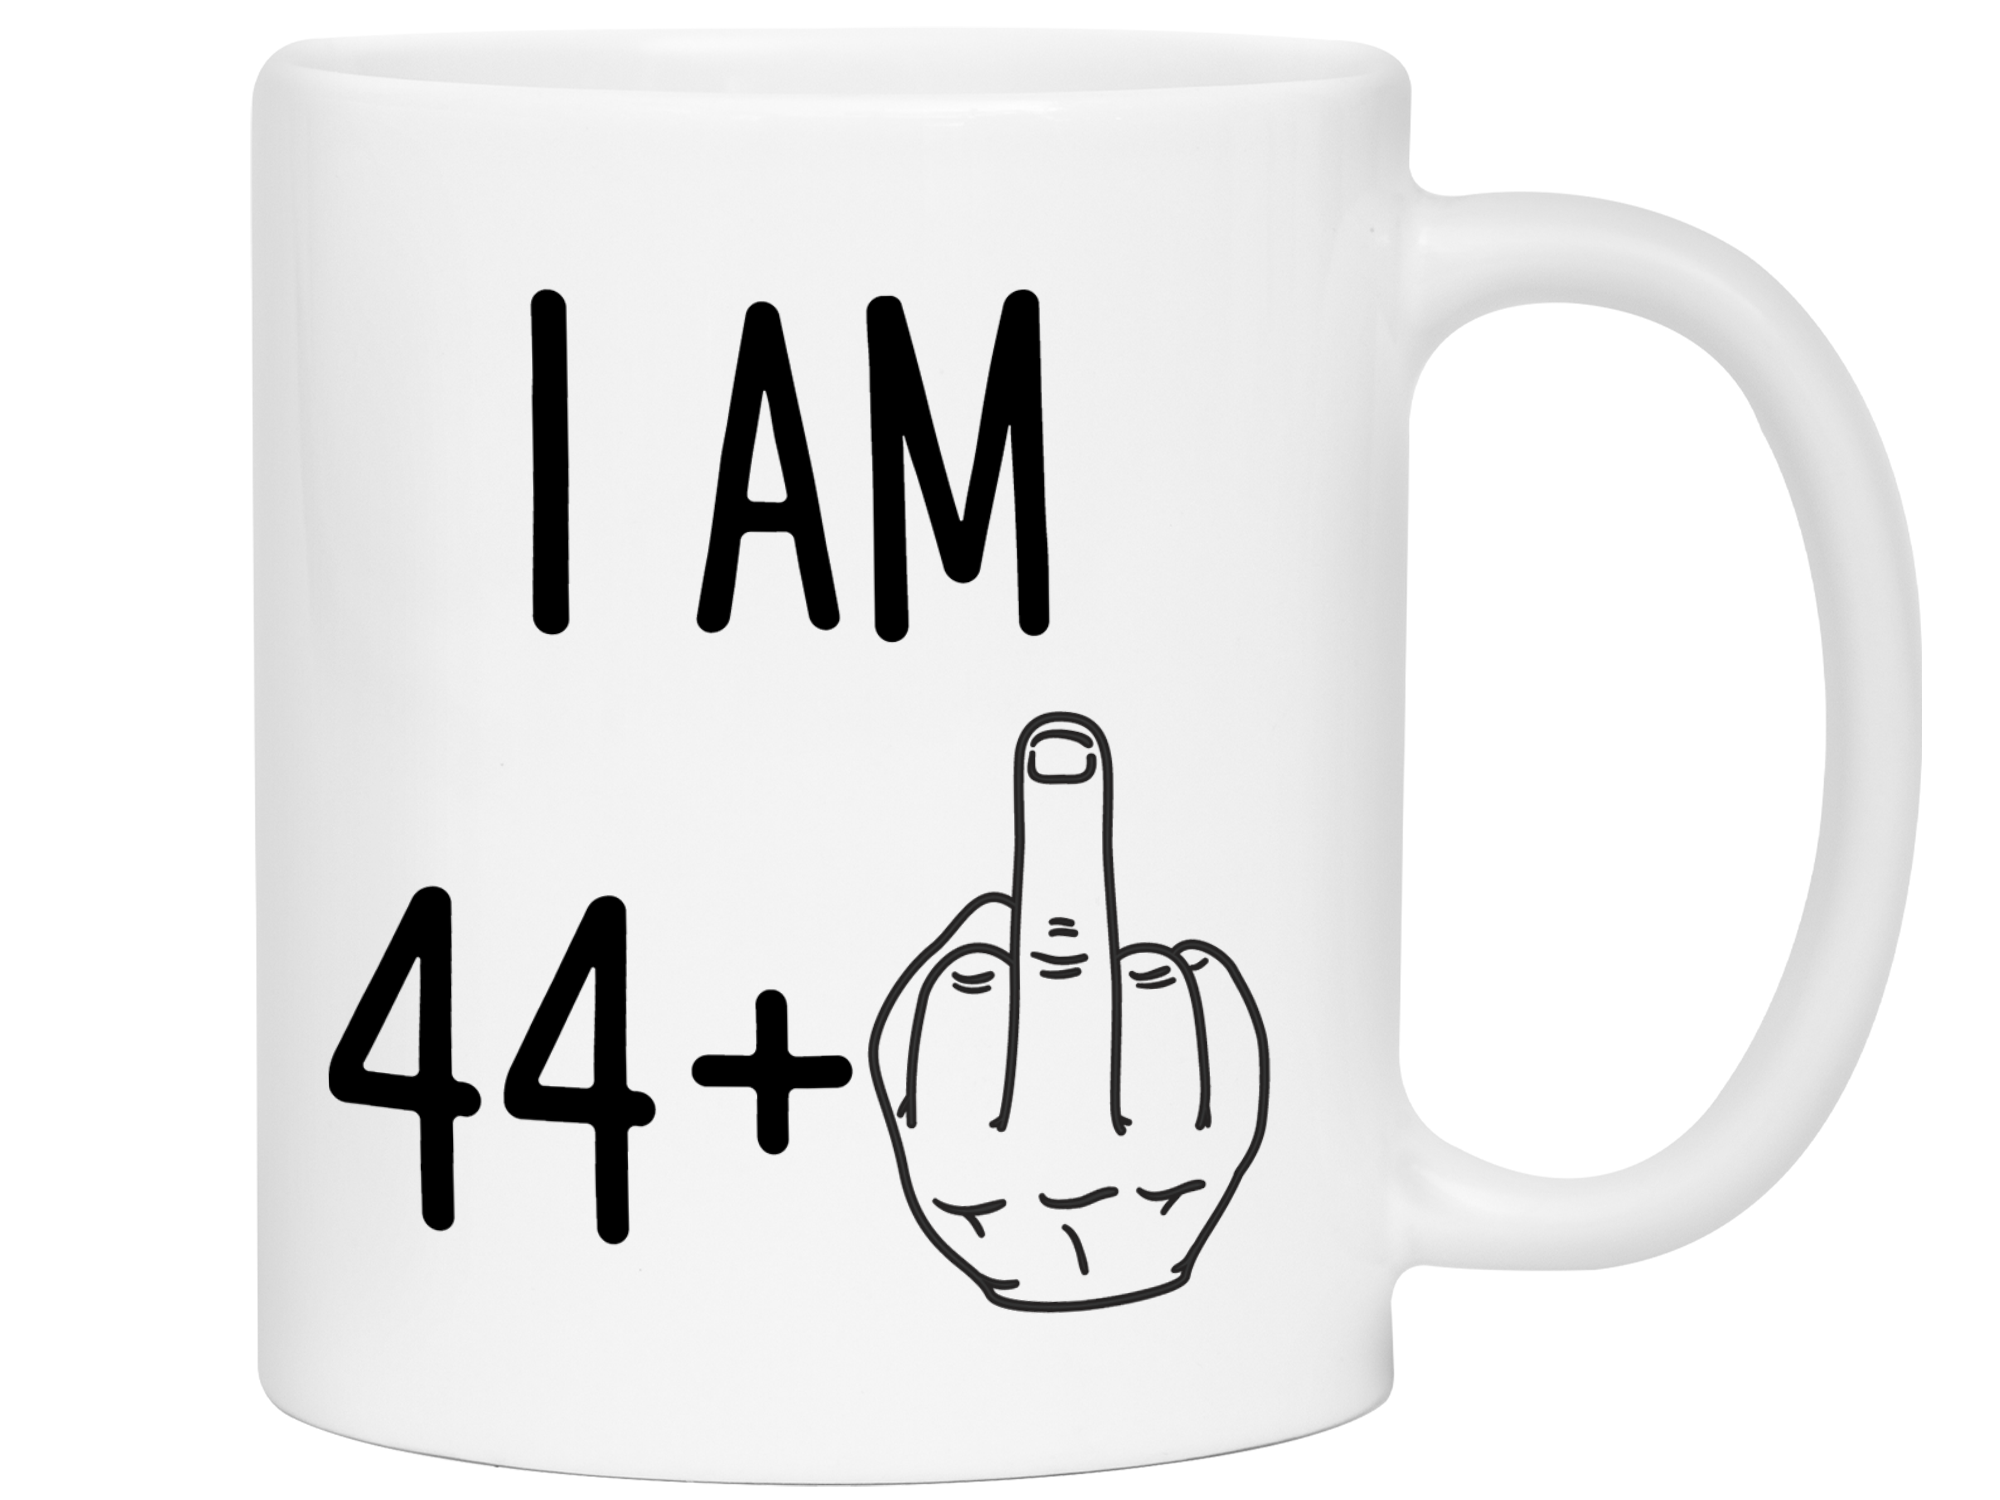 45th Birthday Gifts - I Am 44 + Middle Finger Funny Coffee Mug - Gag Gift Idea